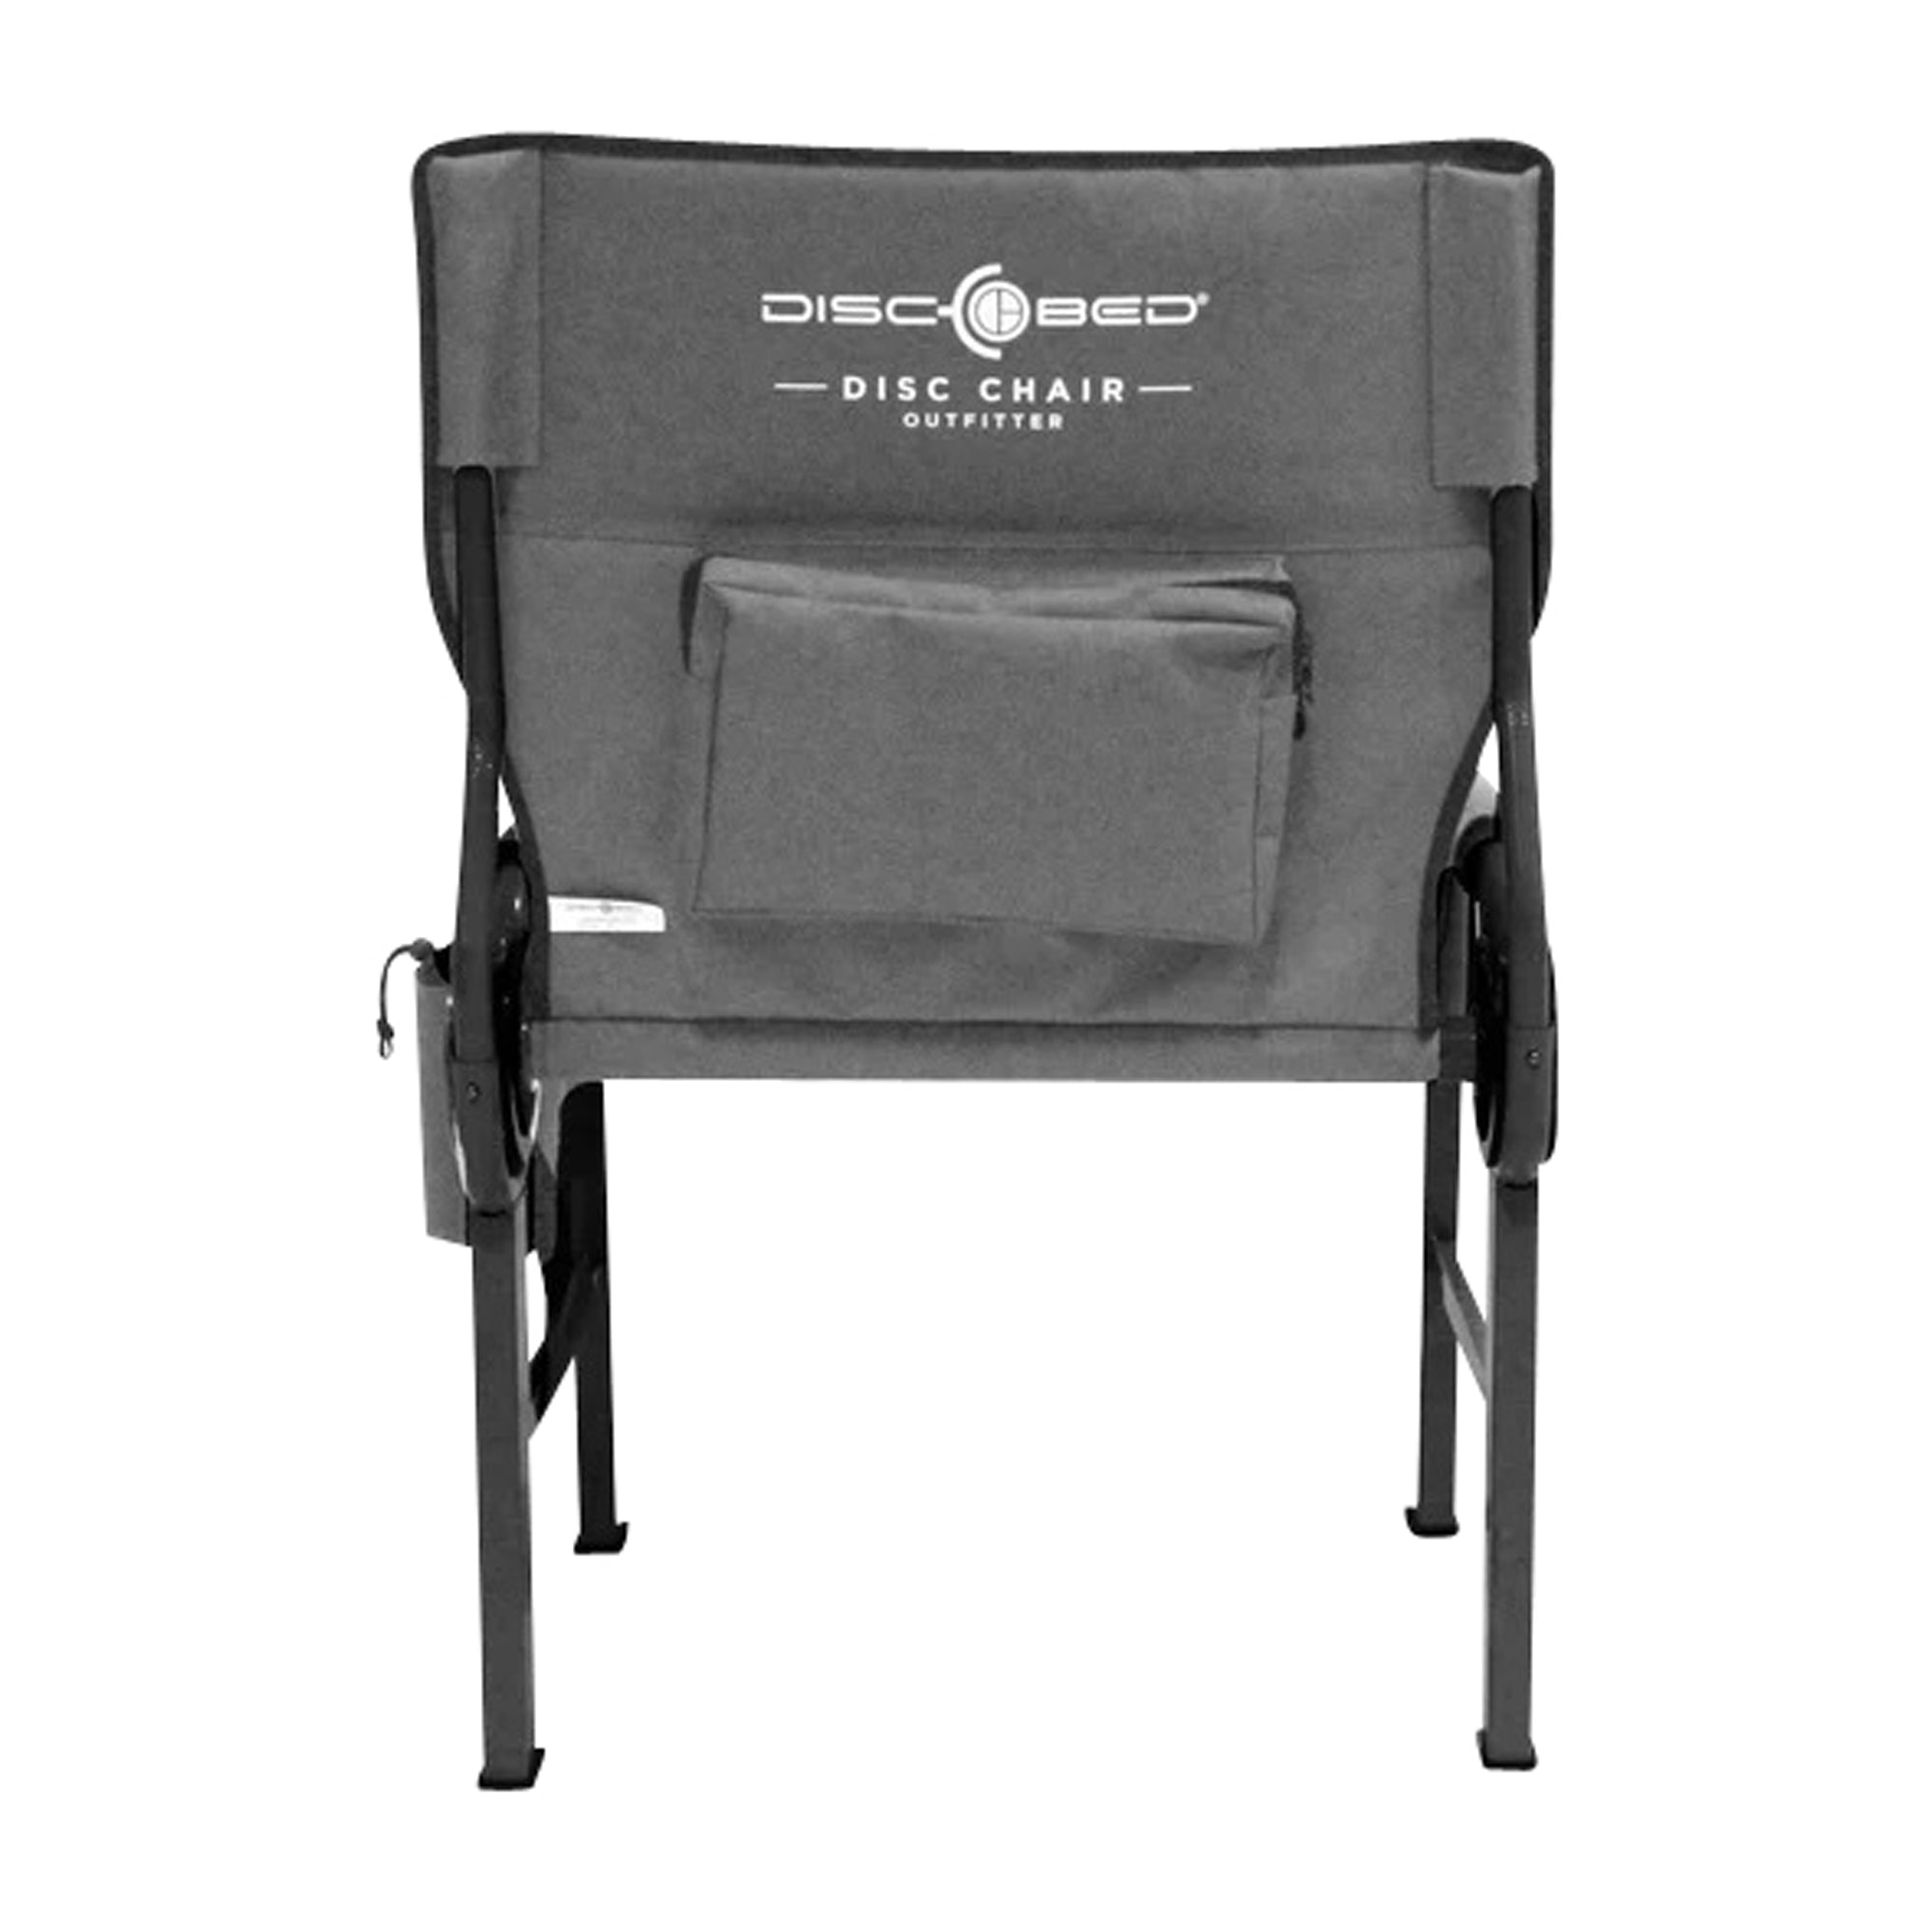 Disc-O-Bed Campingstuhl Disc Chair grau